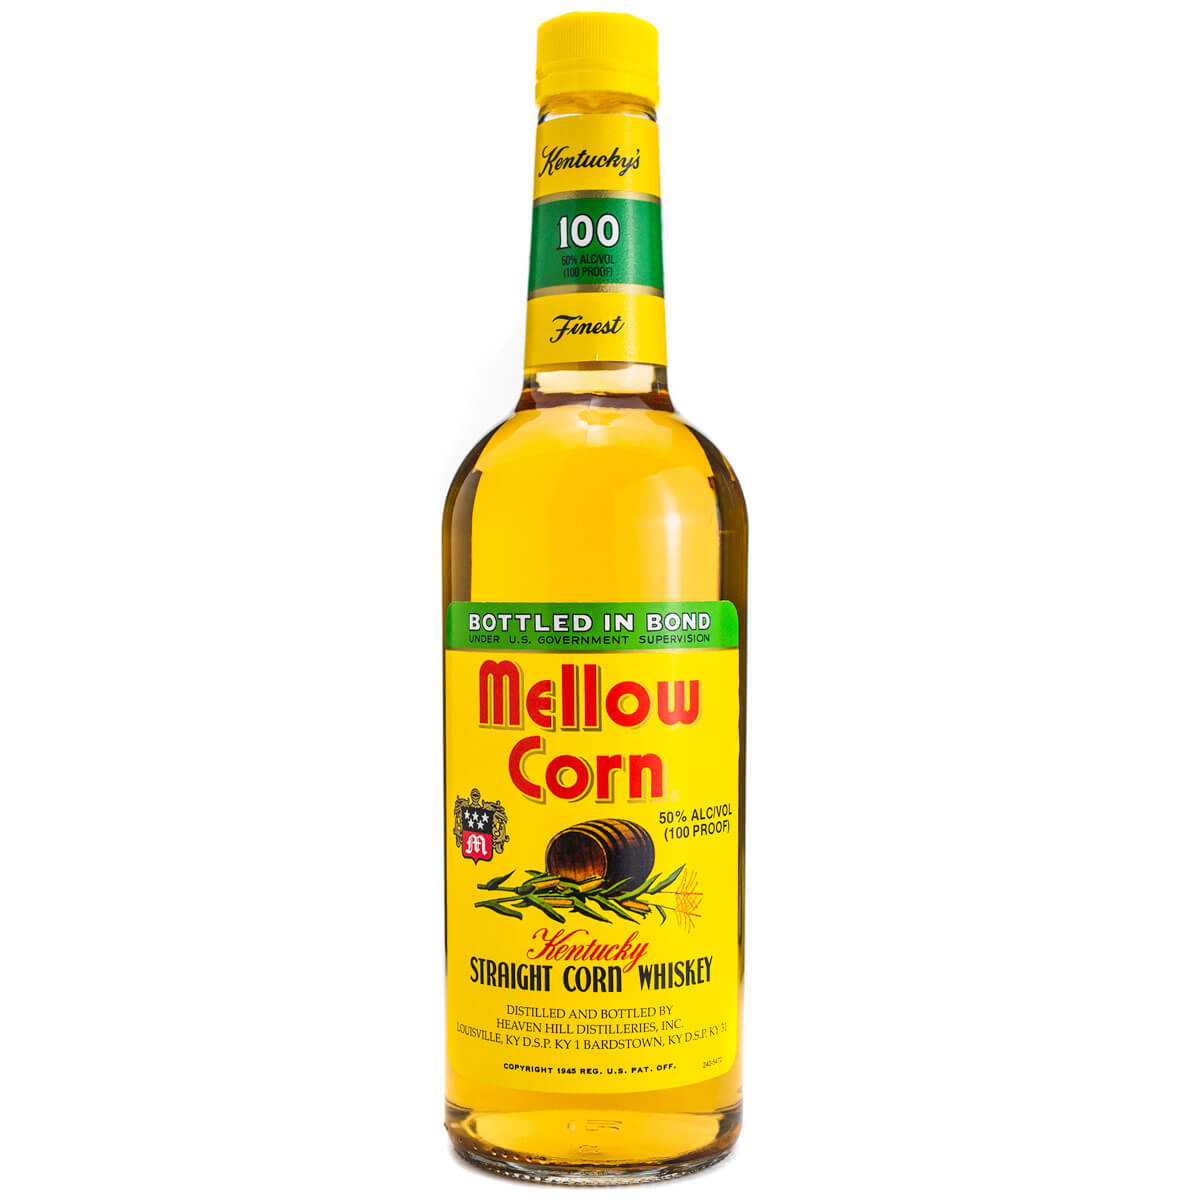 Mellow Corn Whiskey bottle